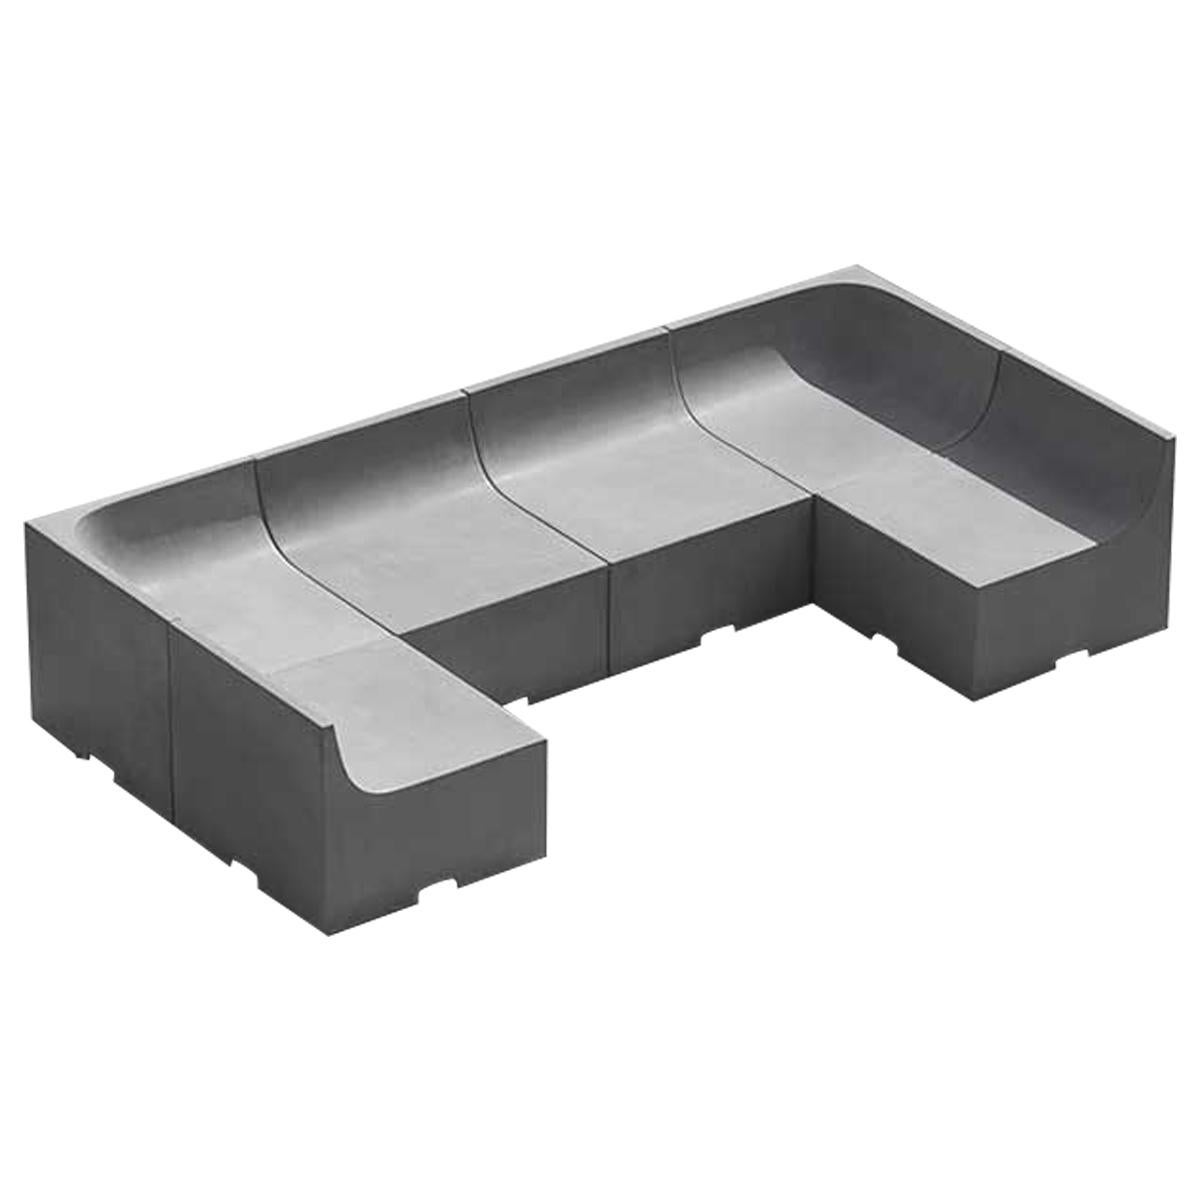 'SHI' Modular Bench / Sofa Made of Concrete